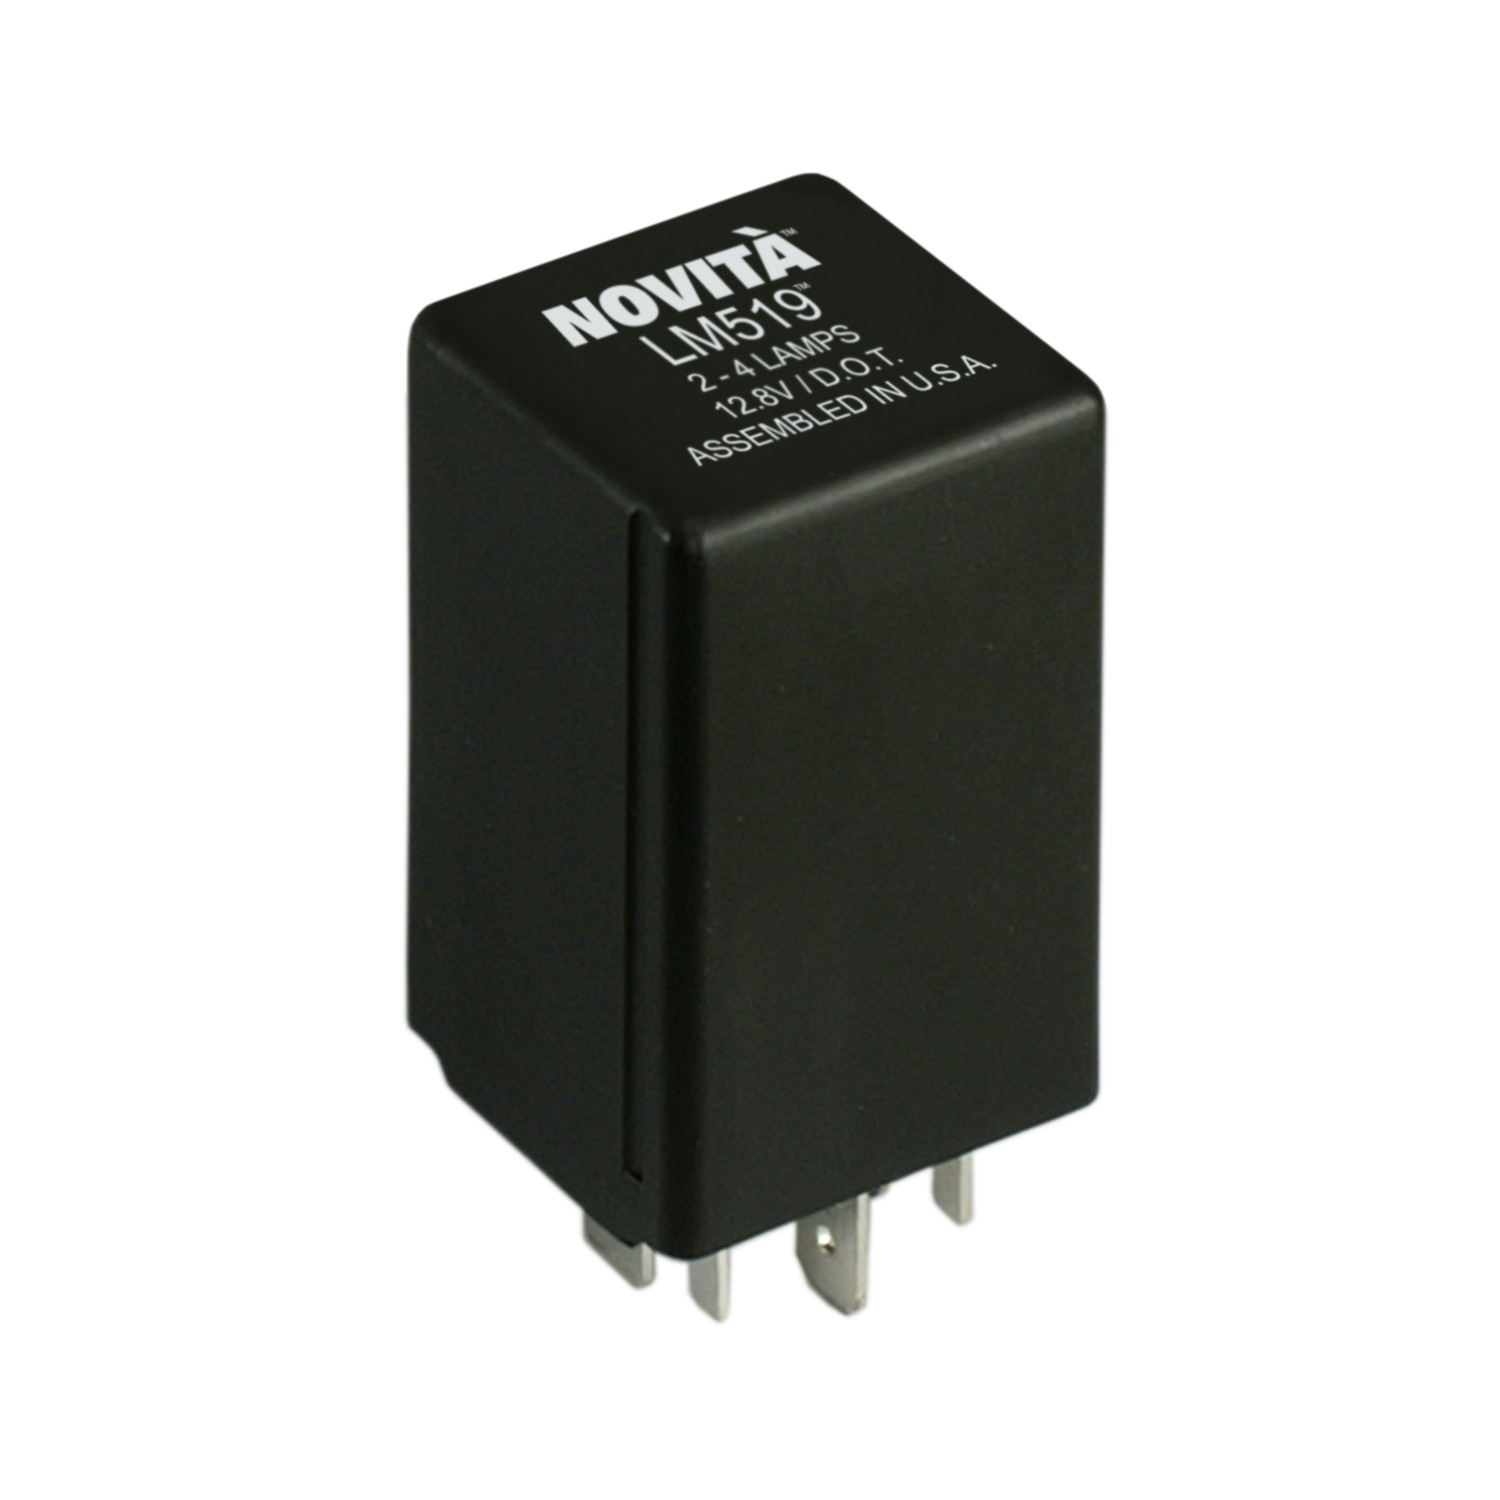 NOVITA FLASHERS - Lighting Control Module - TRD LM519